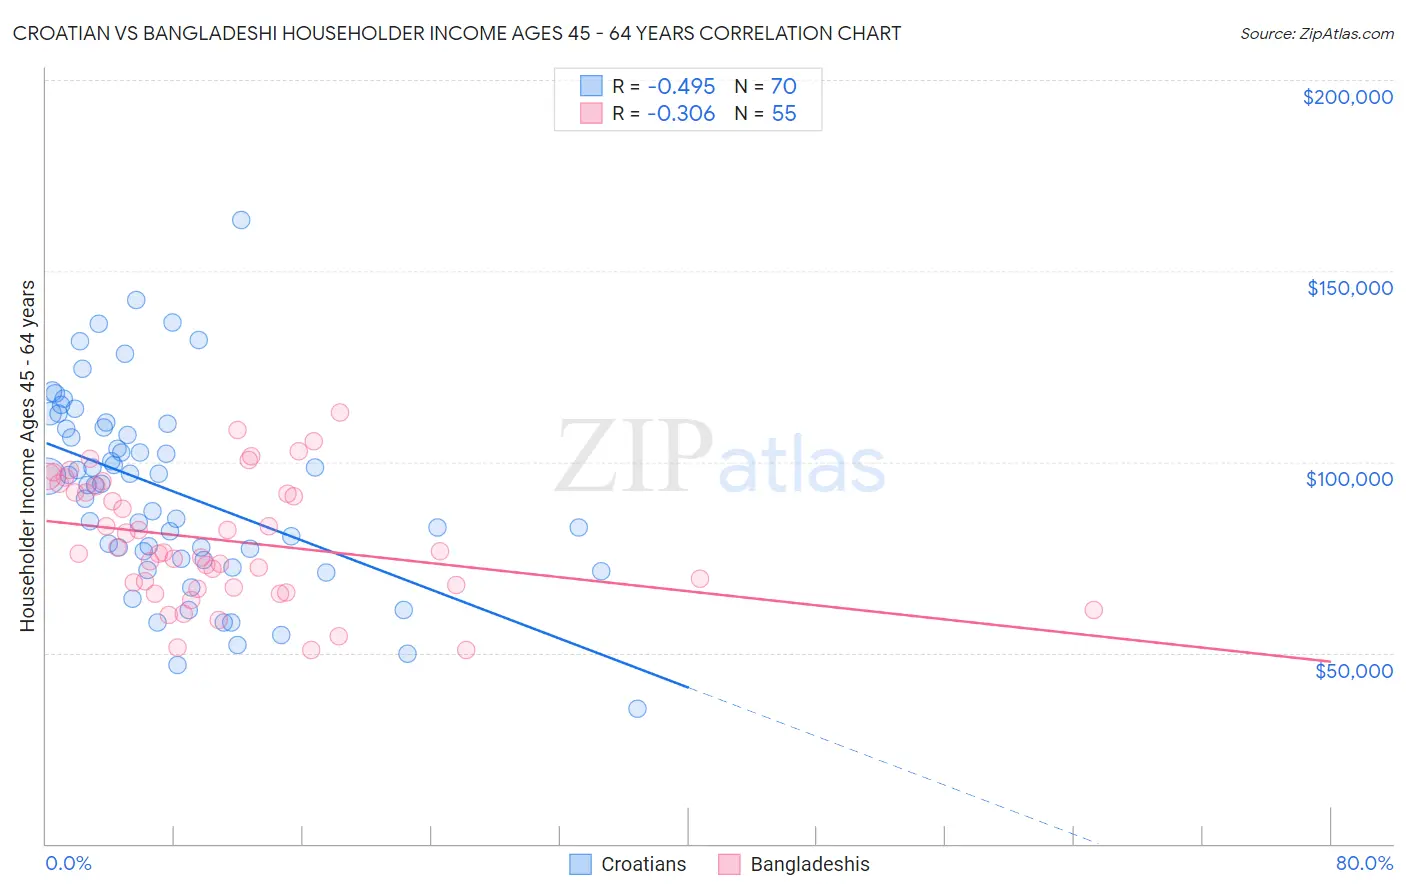 Croatian vs Bangladeshi Householder Income Ages 45 - 64 years